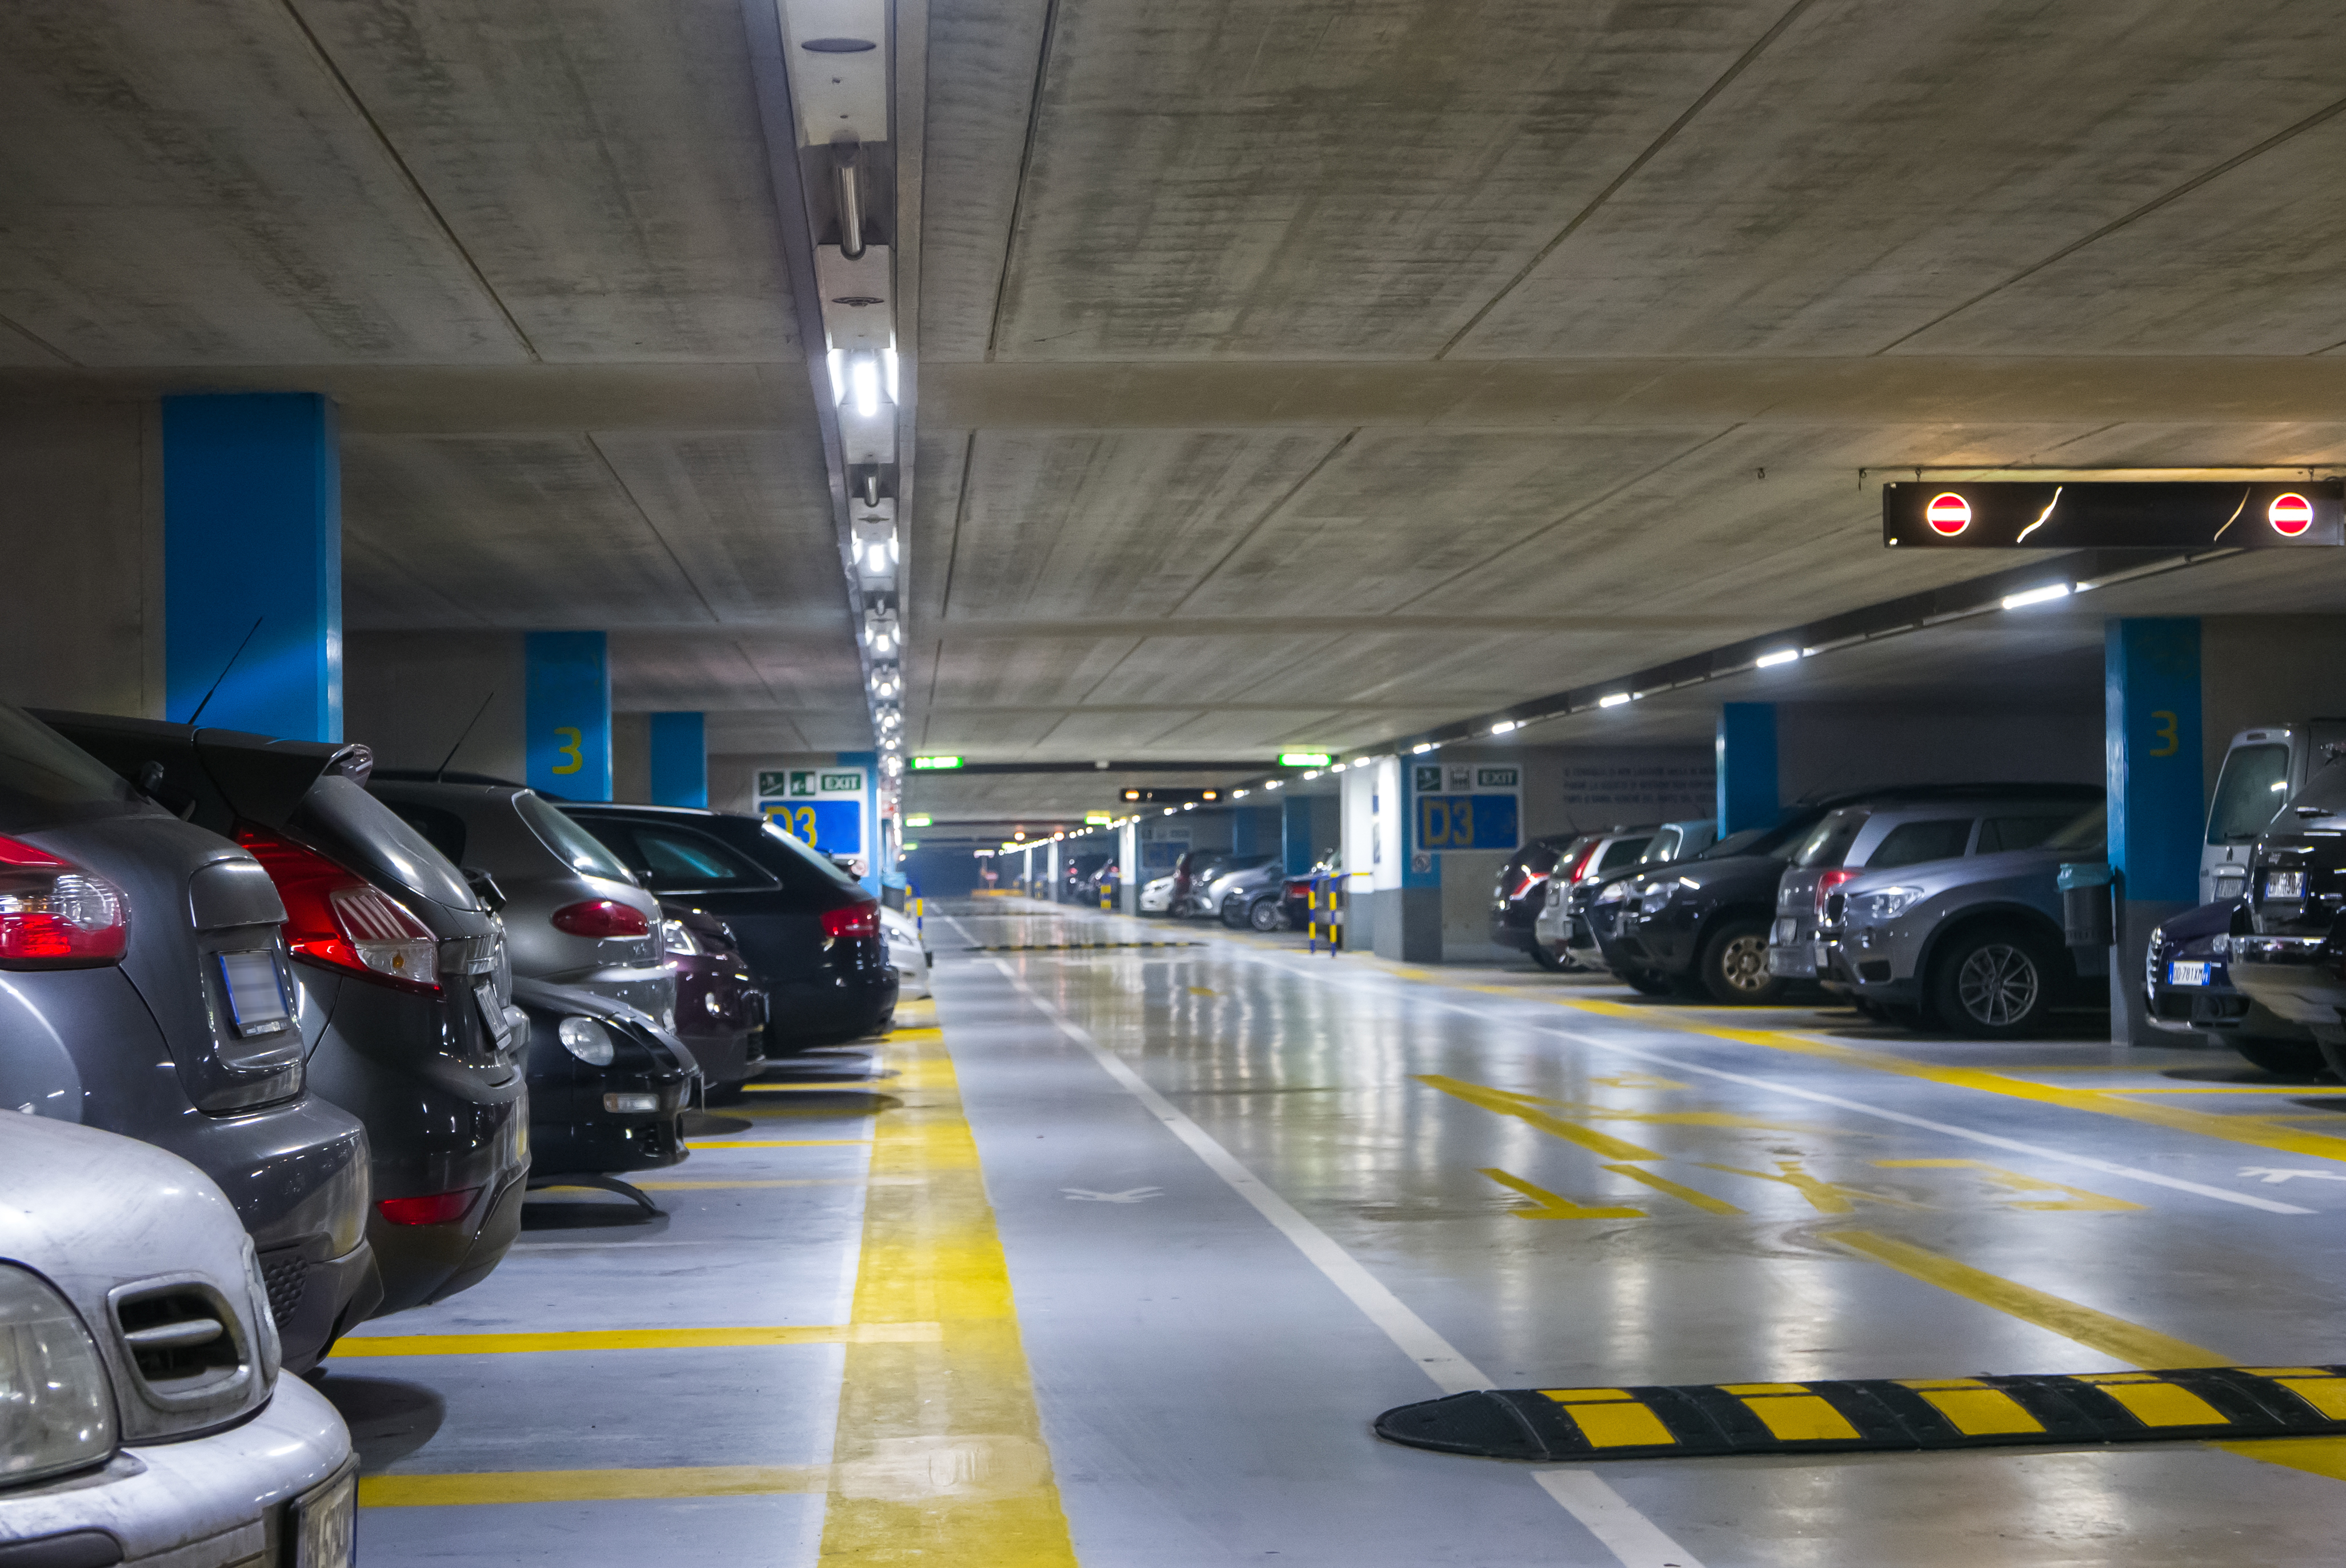 Large multistorey underground car park